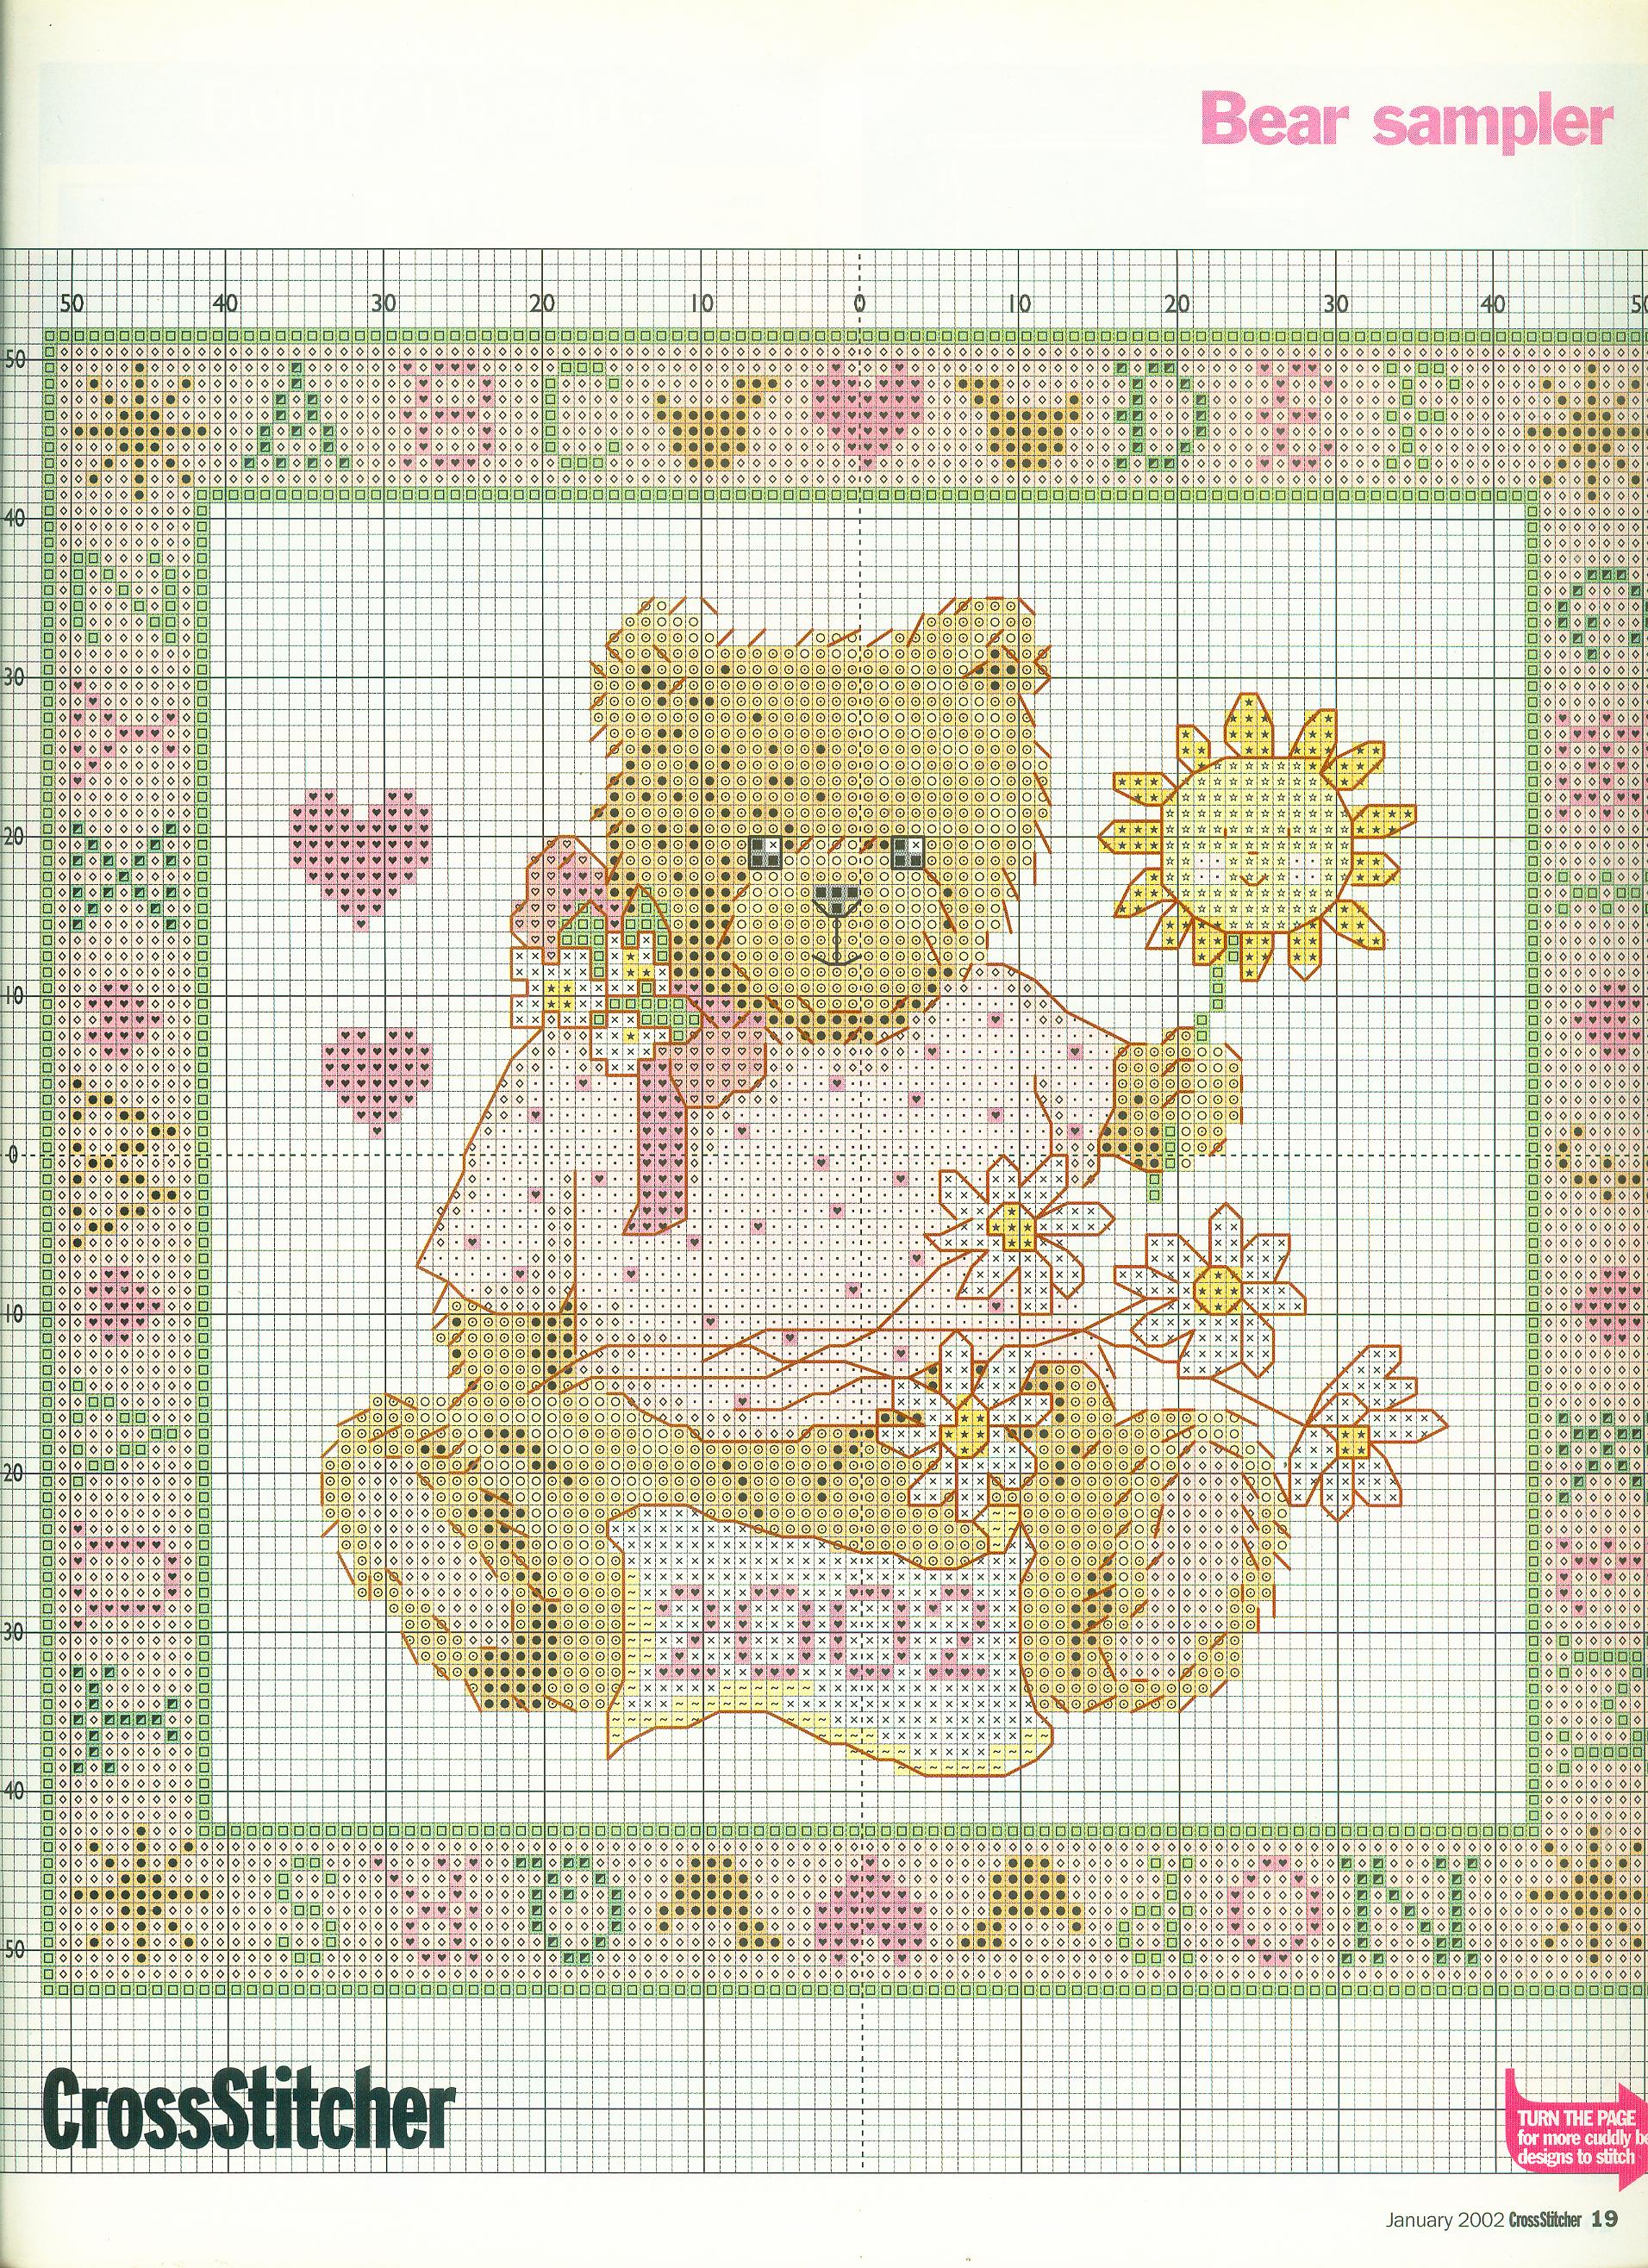 Cross stitch sampler with teddy bear it’ s a girl (3)